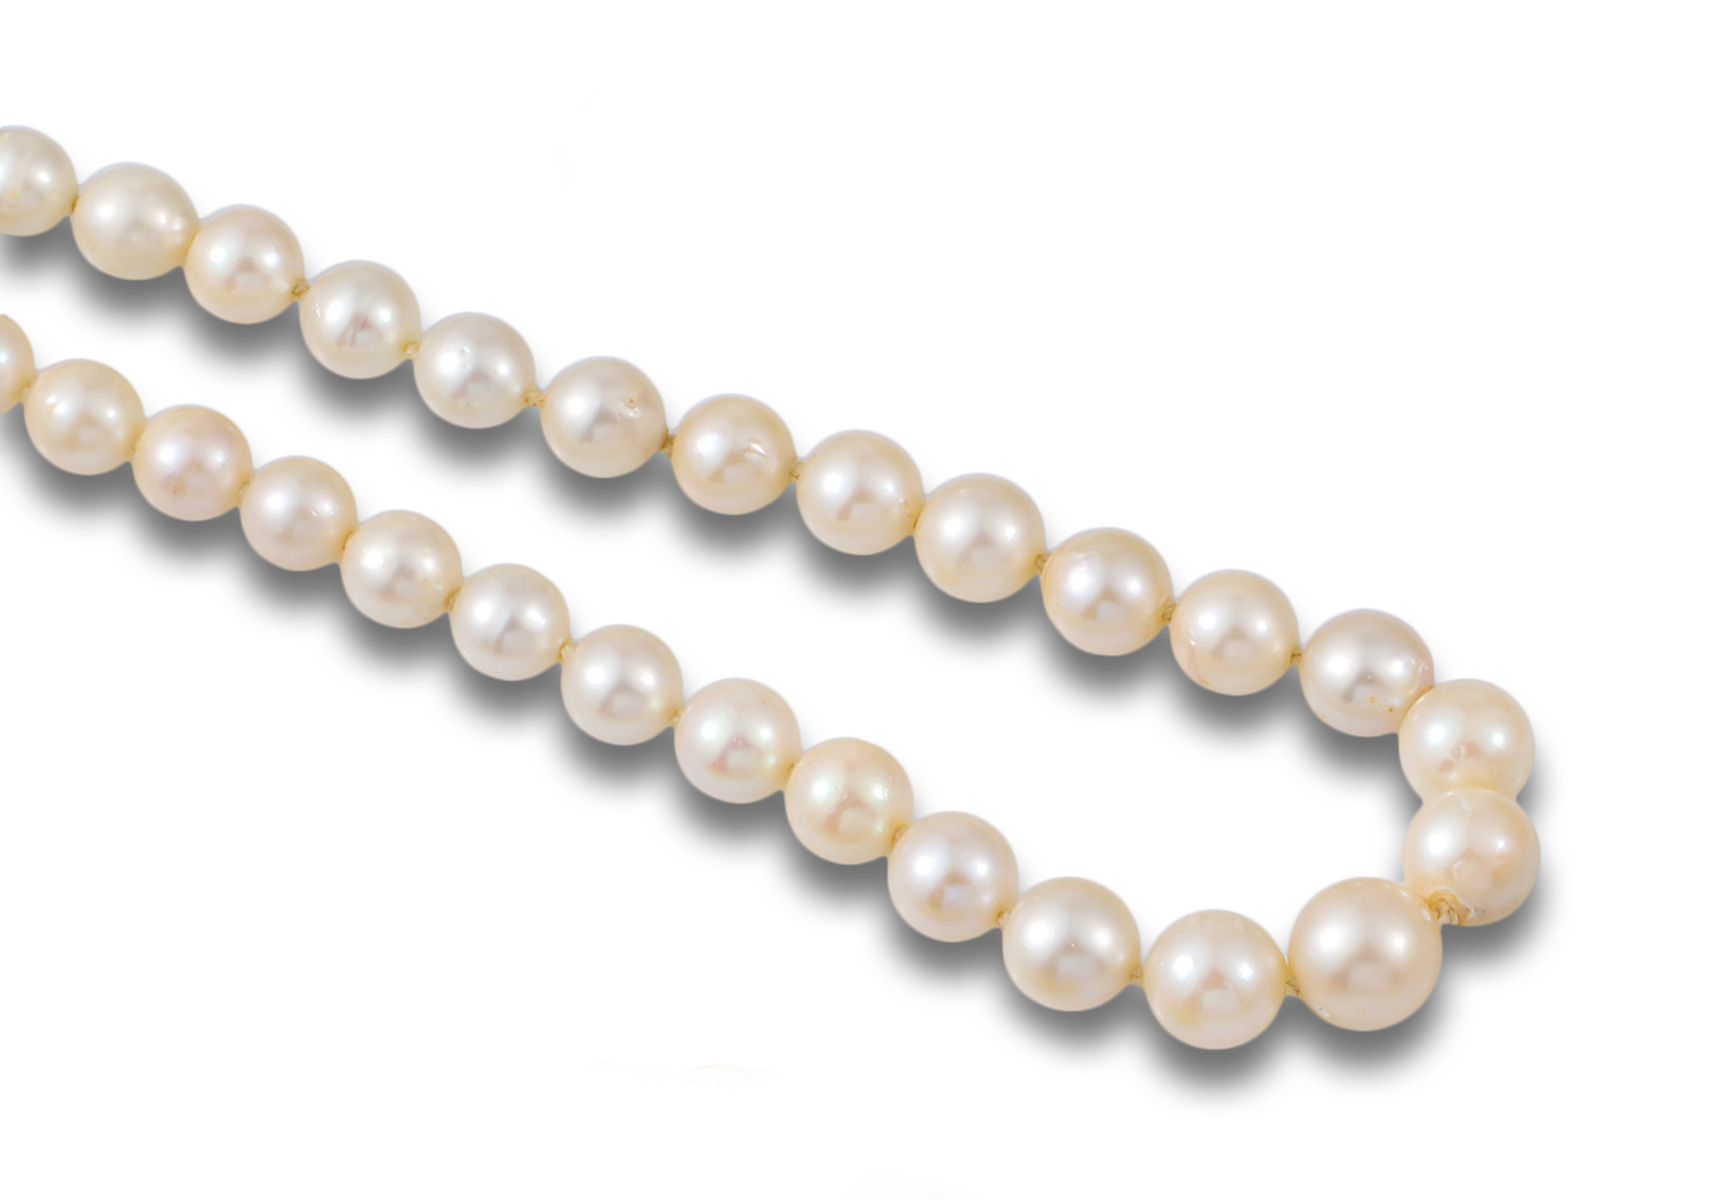 PEARL NECKLACE WITH YELLOW GOLD 由62颗养殖珍珠组成的项链，呈梯度排列，刻度为6至9毫米，配有18K黄金搭扣。